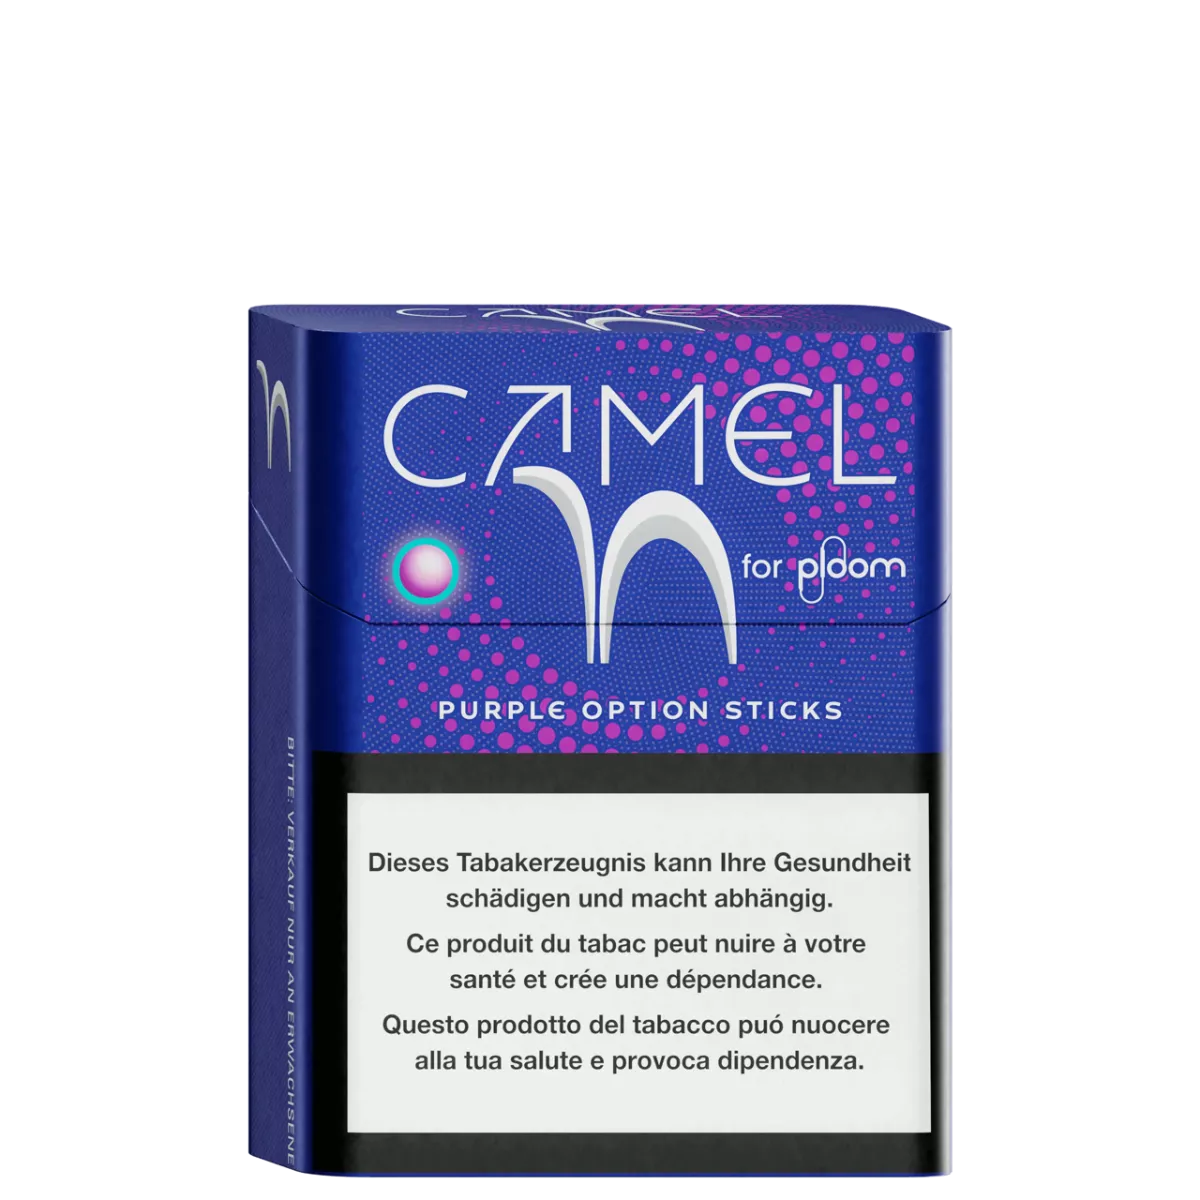 Camel Purple option sticks für ploom linker Winkel